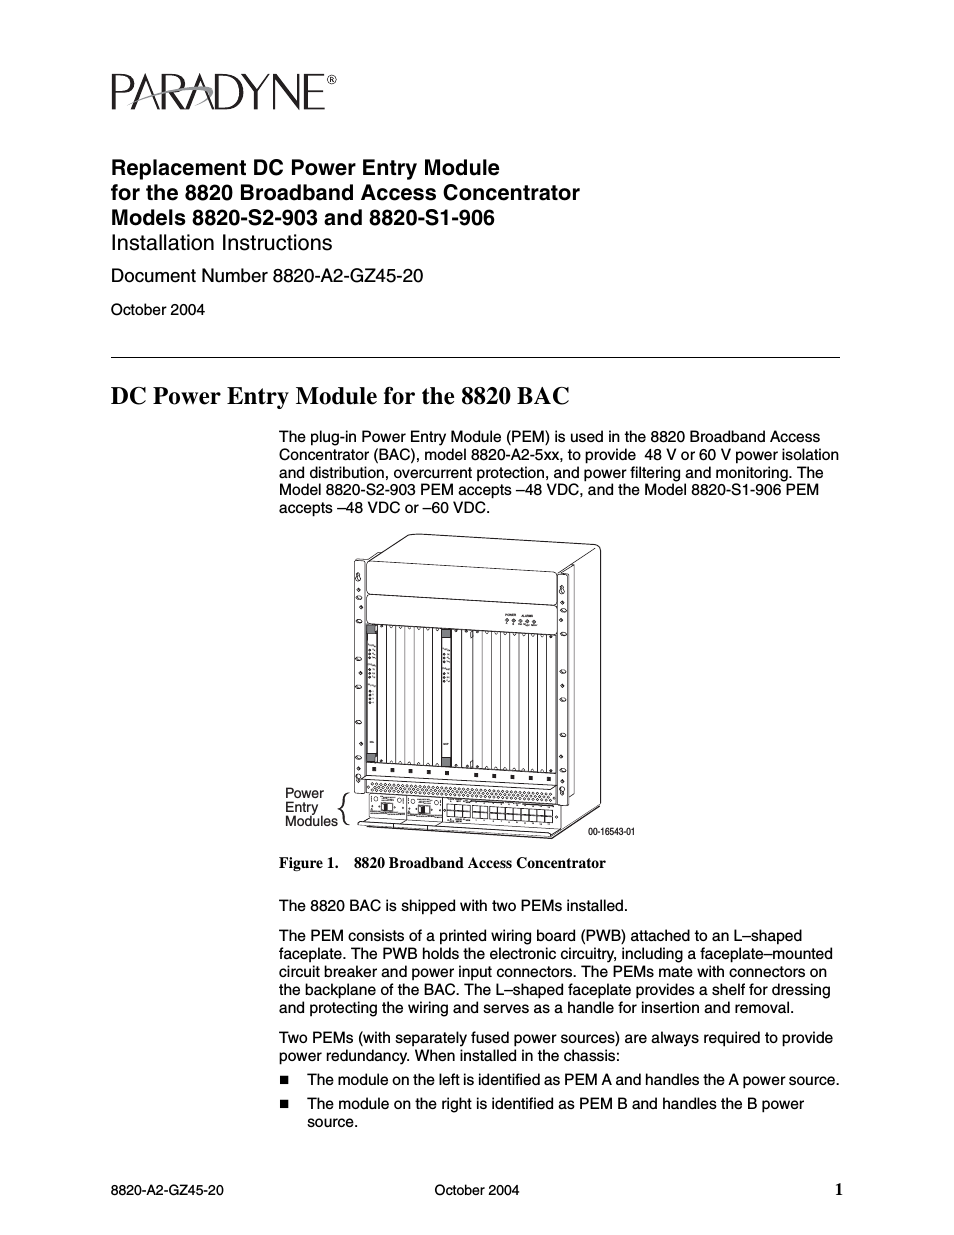 DC Power Entry Module 8820-S2-903